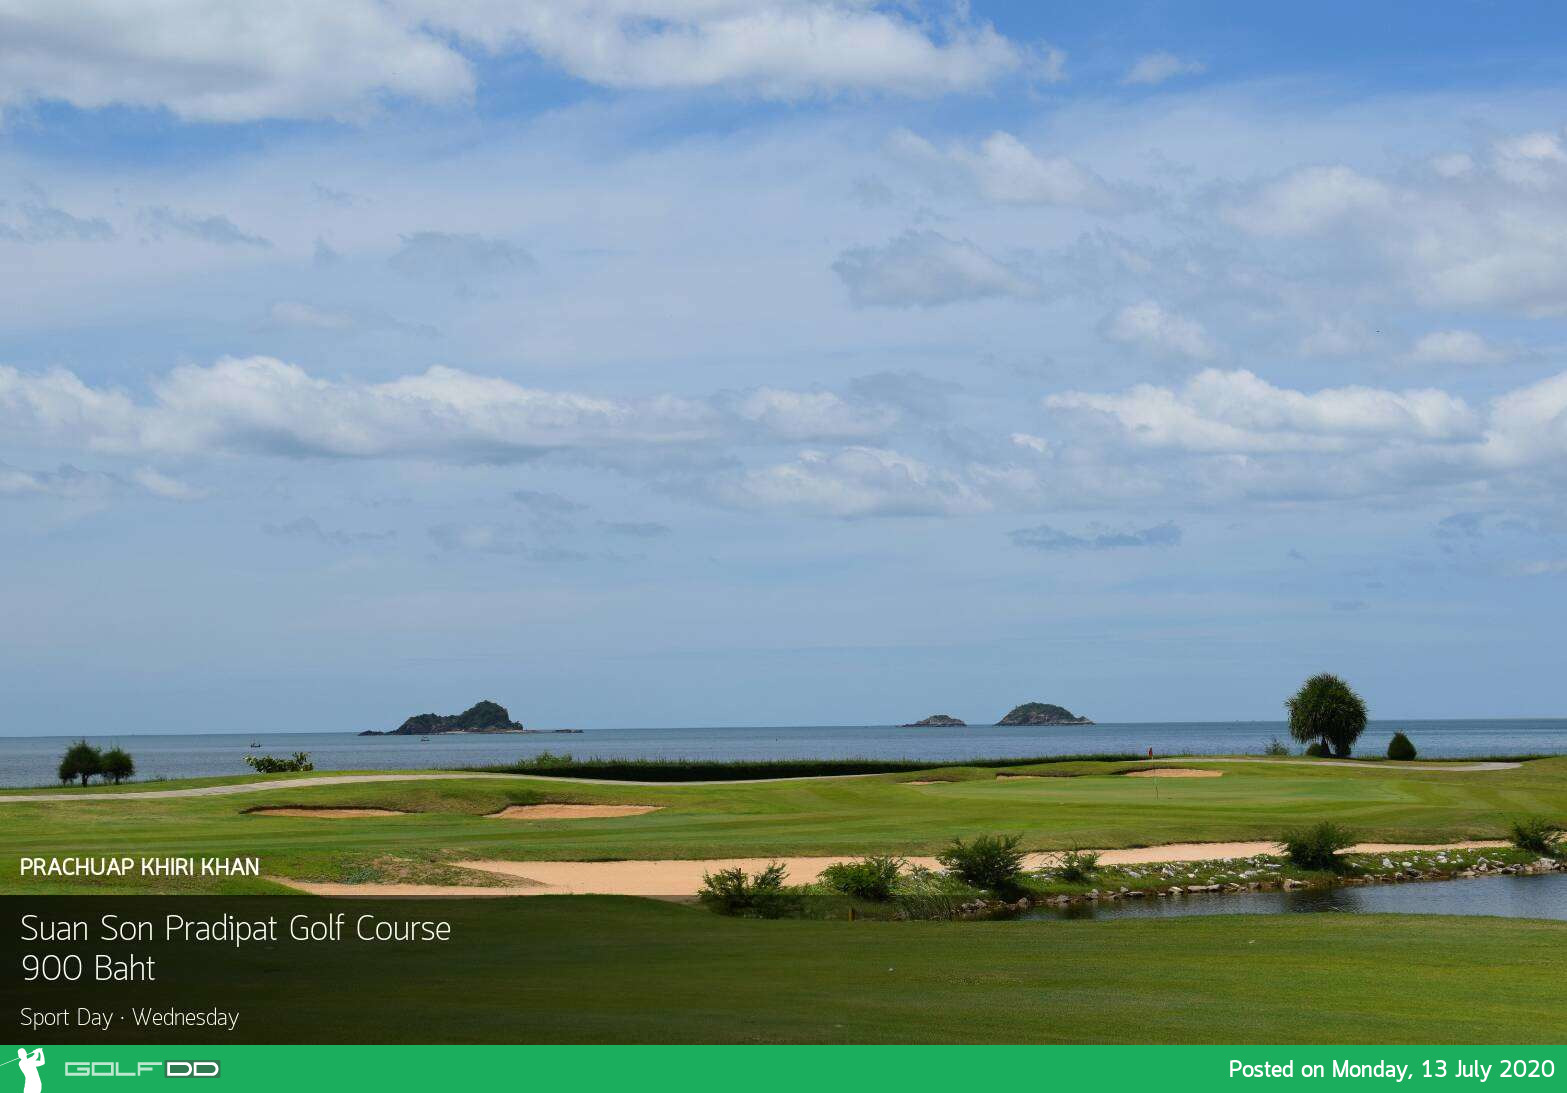 Suan Son Pradipat Golf Course ออกแพ็คเกจรวมทุกอย่างราคาเบาๆ 